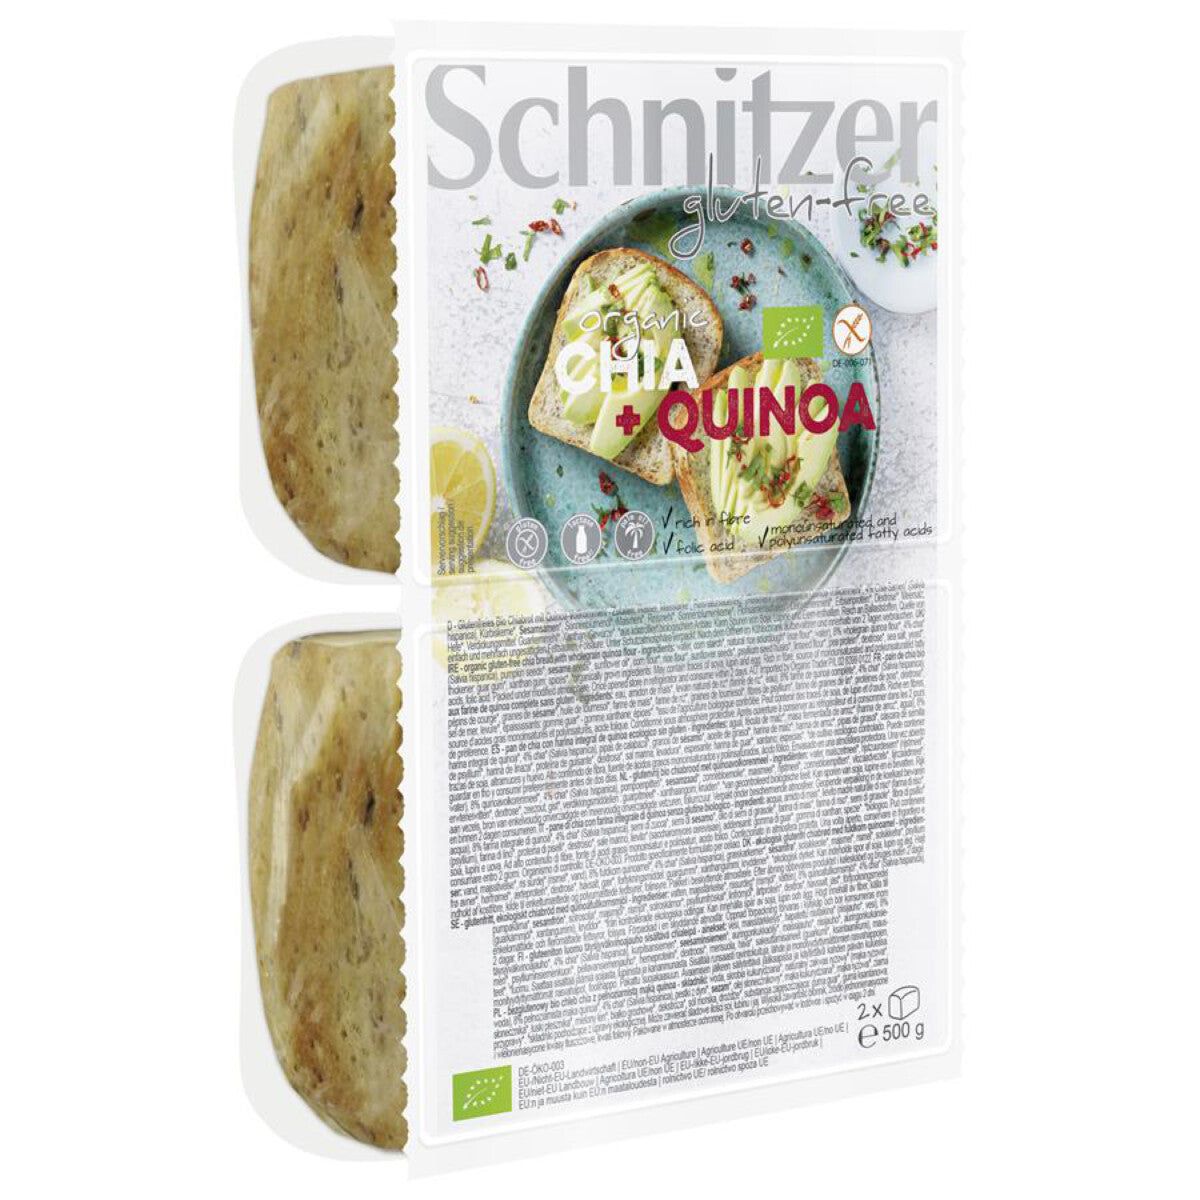 Schnitzer Chia +Quinoa Brot BIO glutenfrei